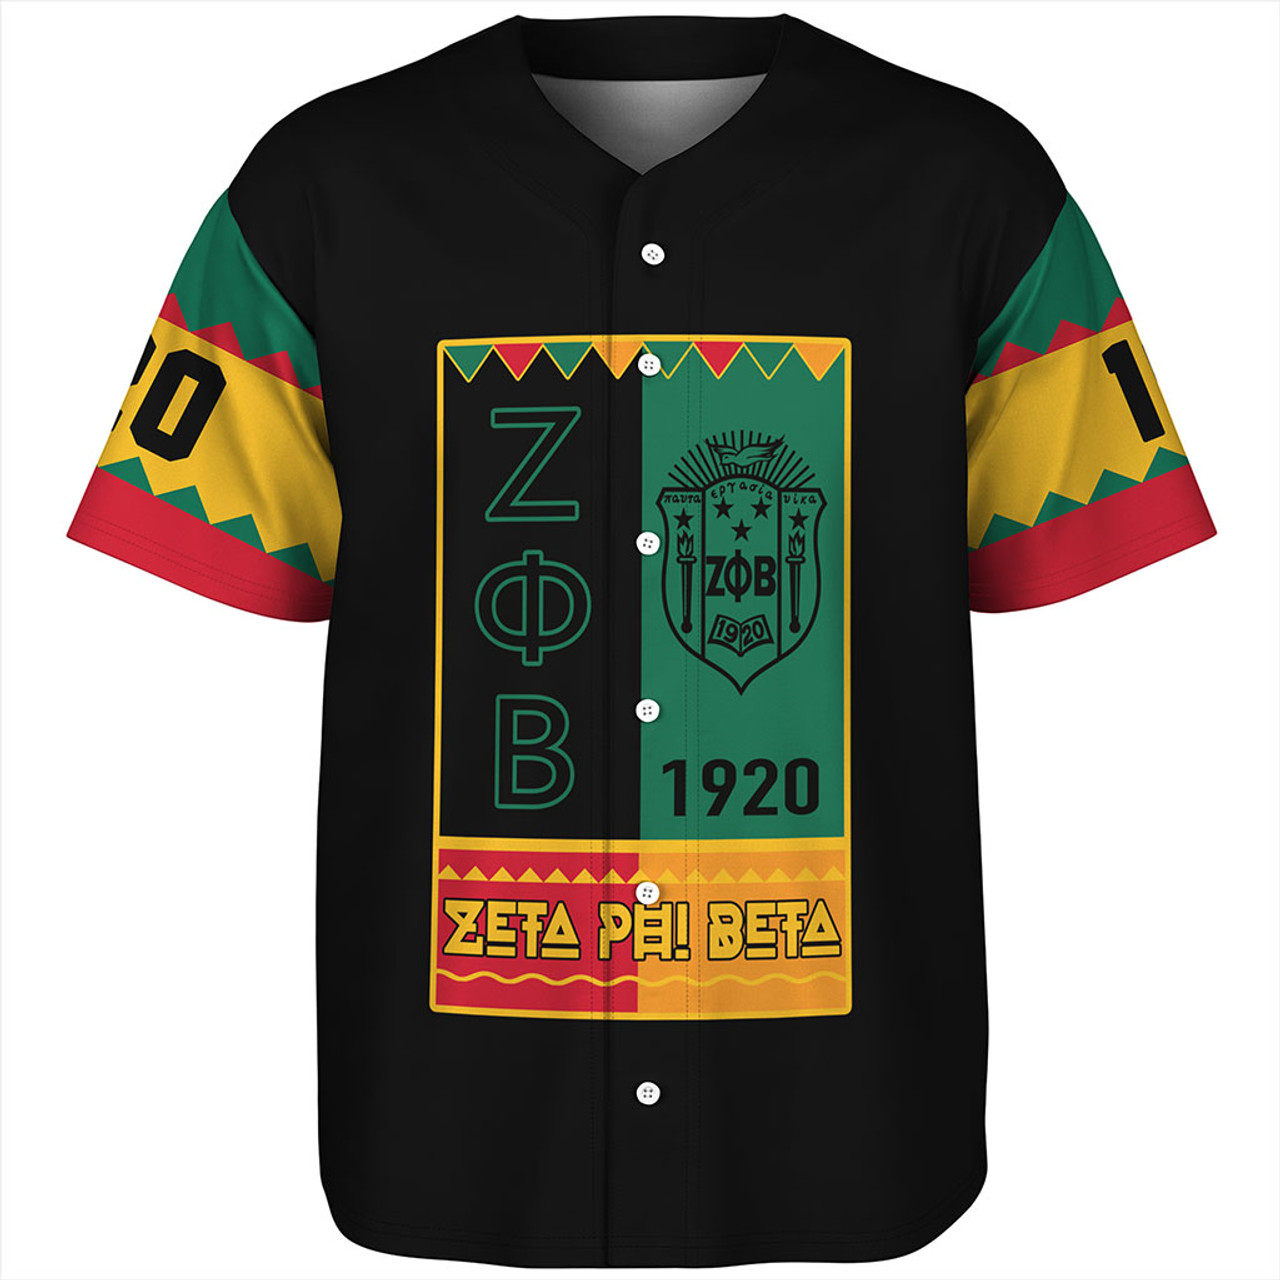 Zeta Phi Beta Baseball Shirt Black History Month